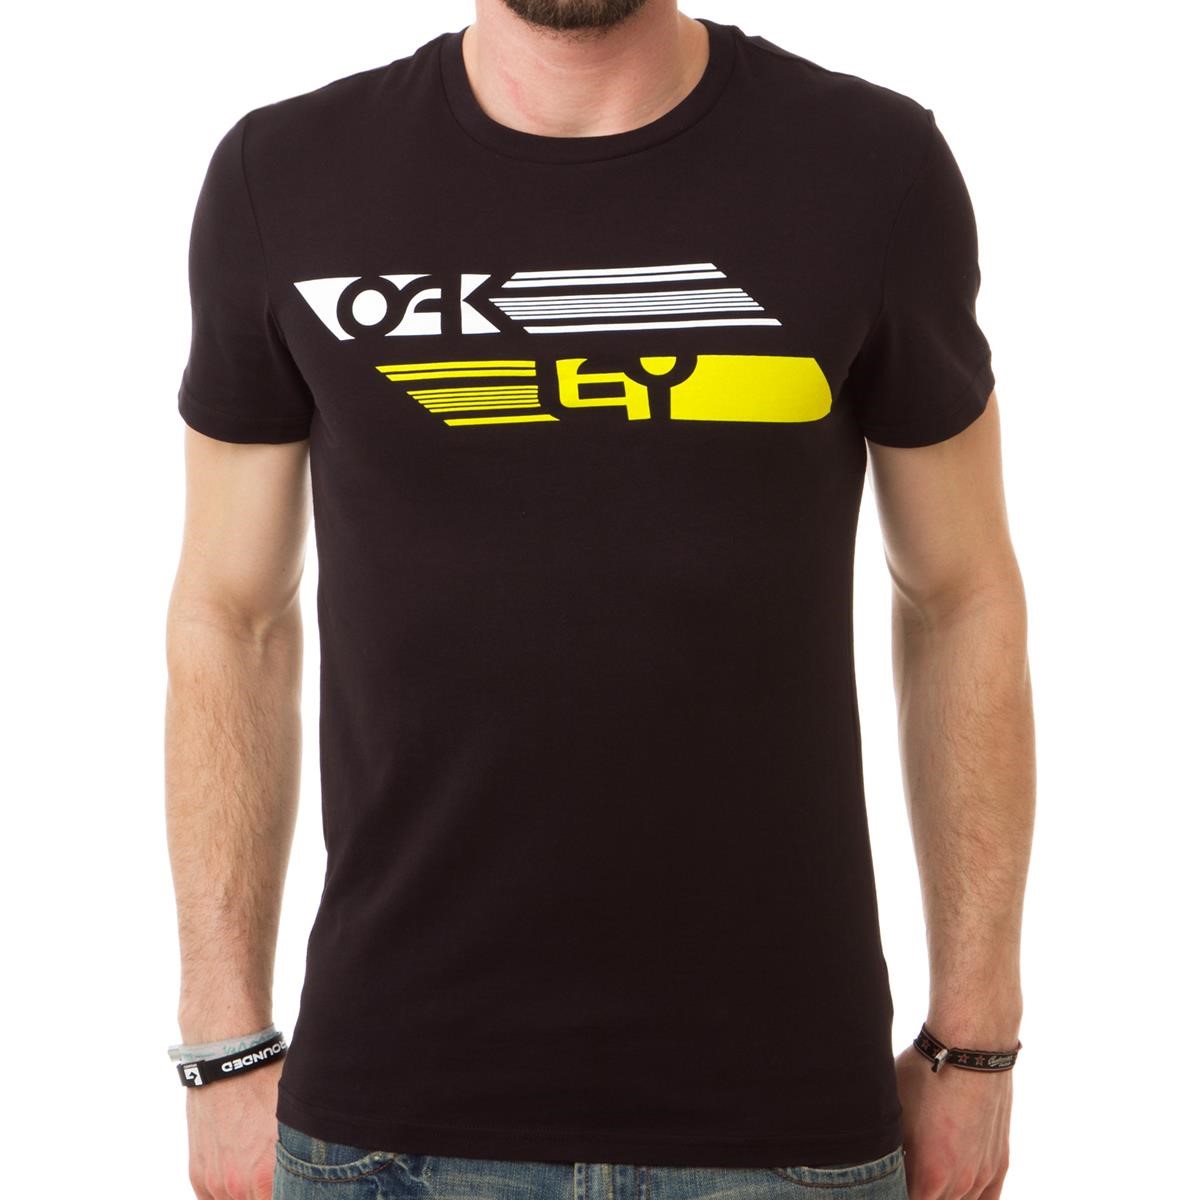 Freizeit/Streetwear Bekleidung-T-Shirts/Polos - Oakley T-Shirt Flip Jet Black